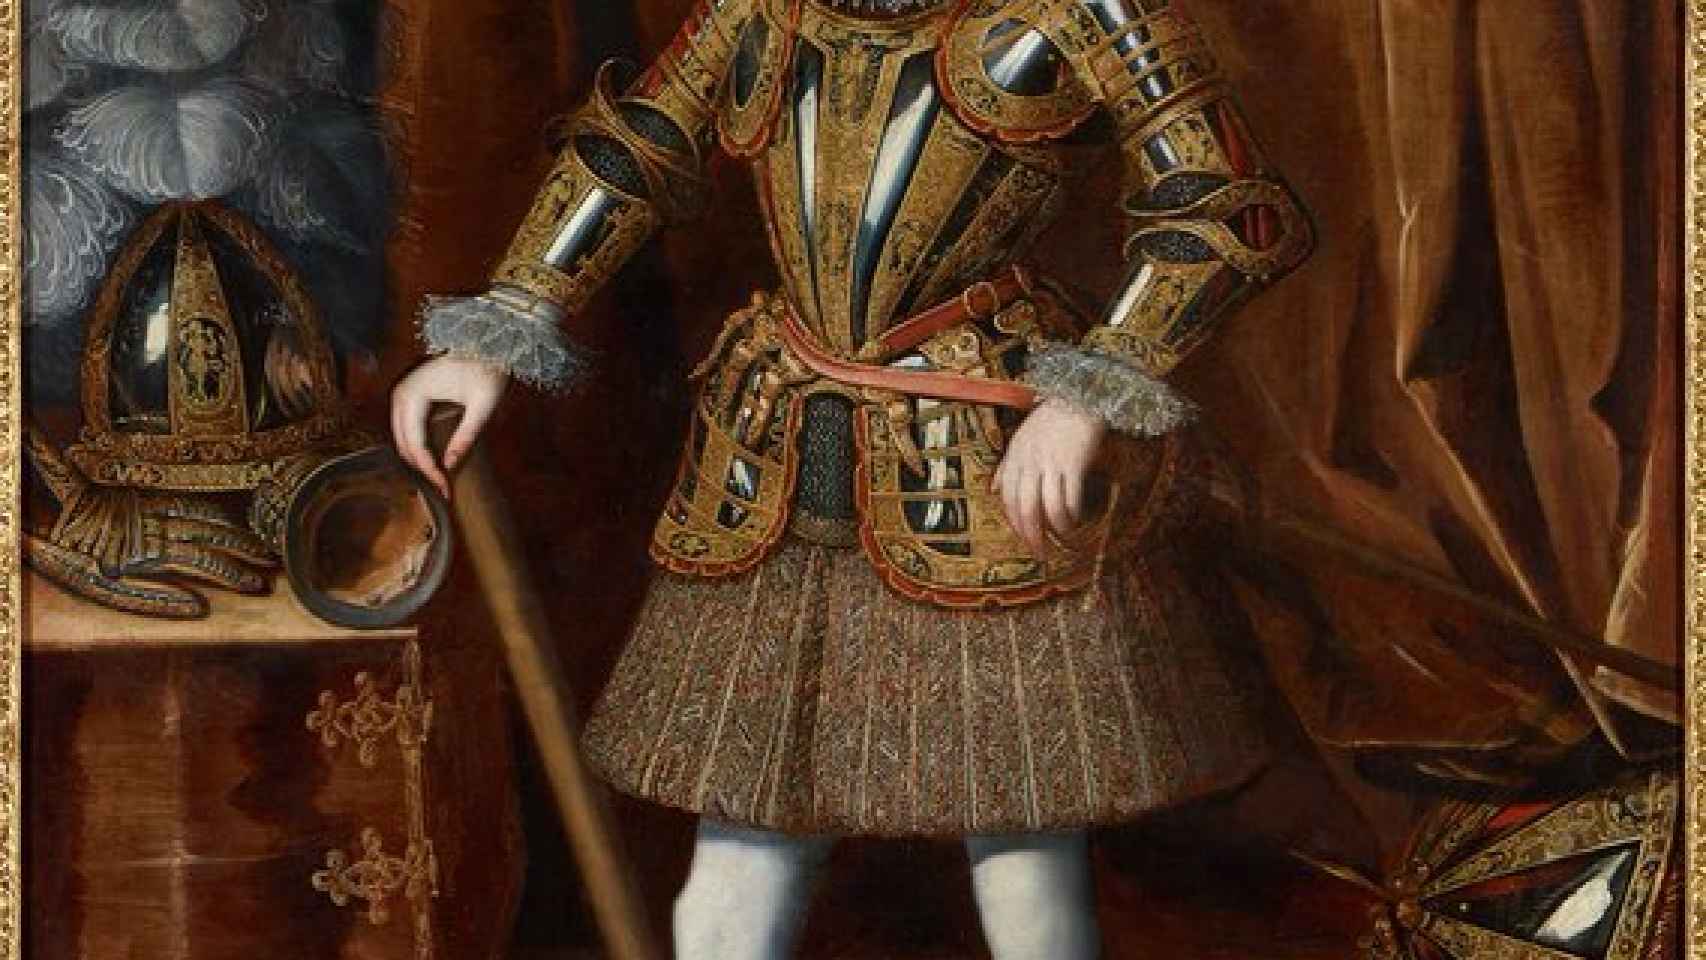 Felipe IV